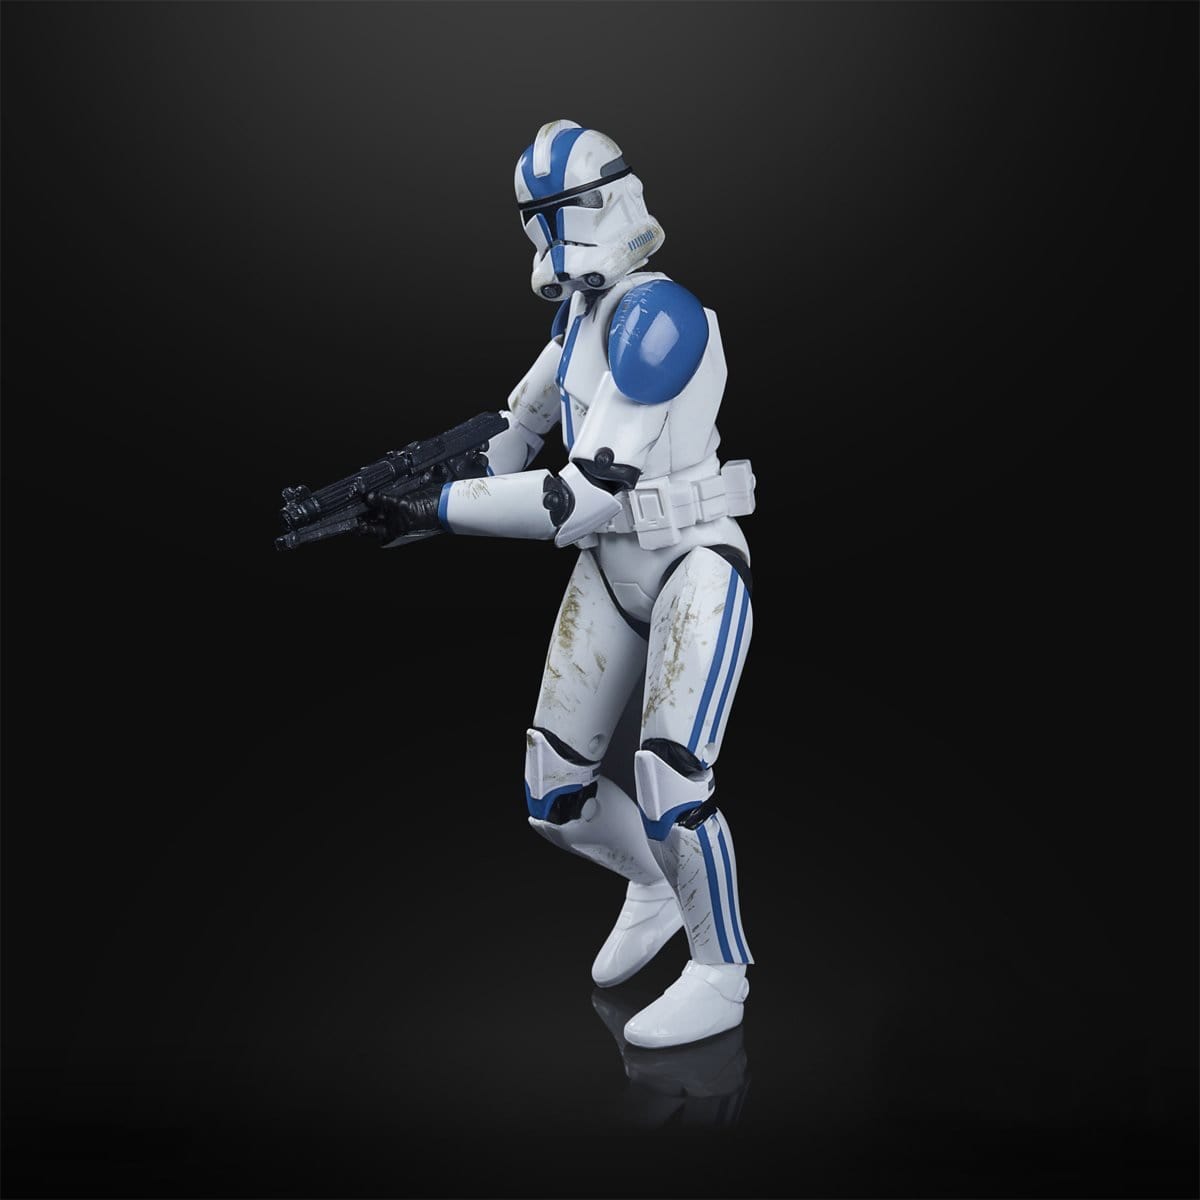 Star Wars The Black Series Archive 501st Legion Clone Trooper 6" Action Figure - Pop-O-Loco - Hasbro